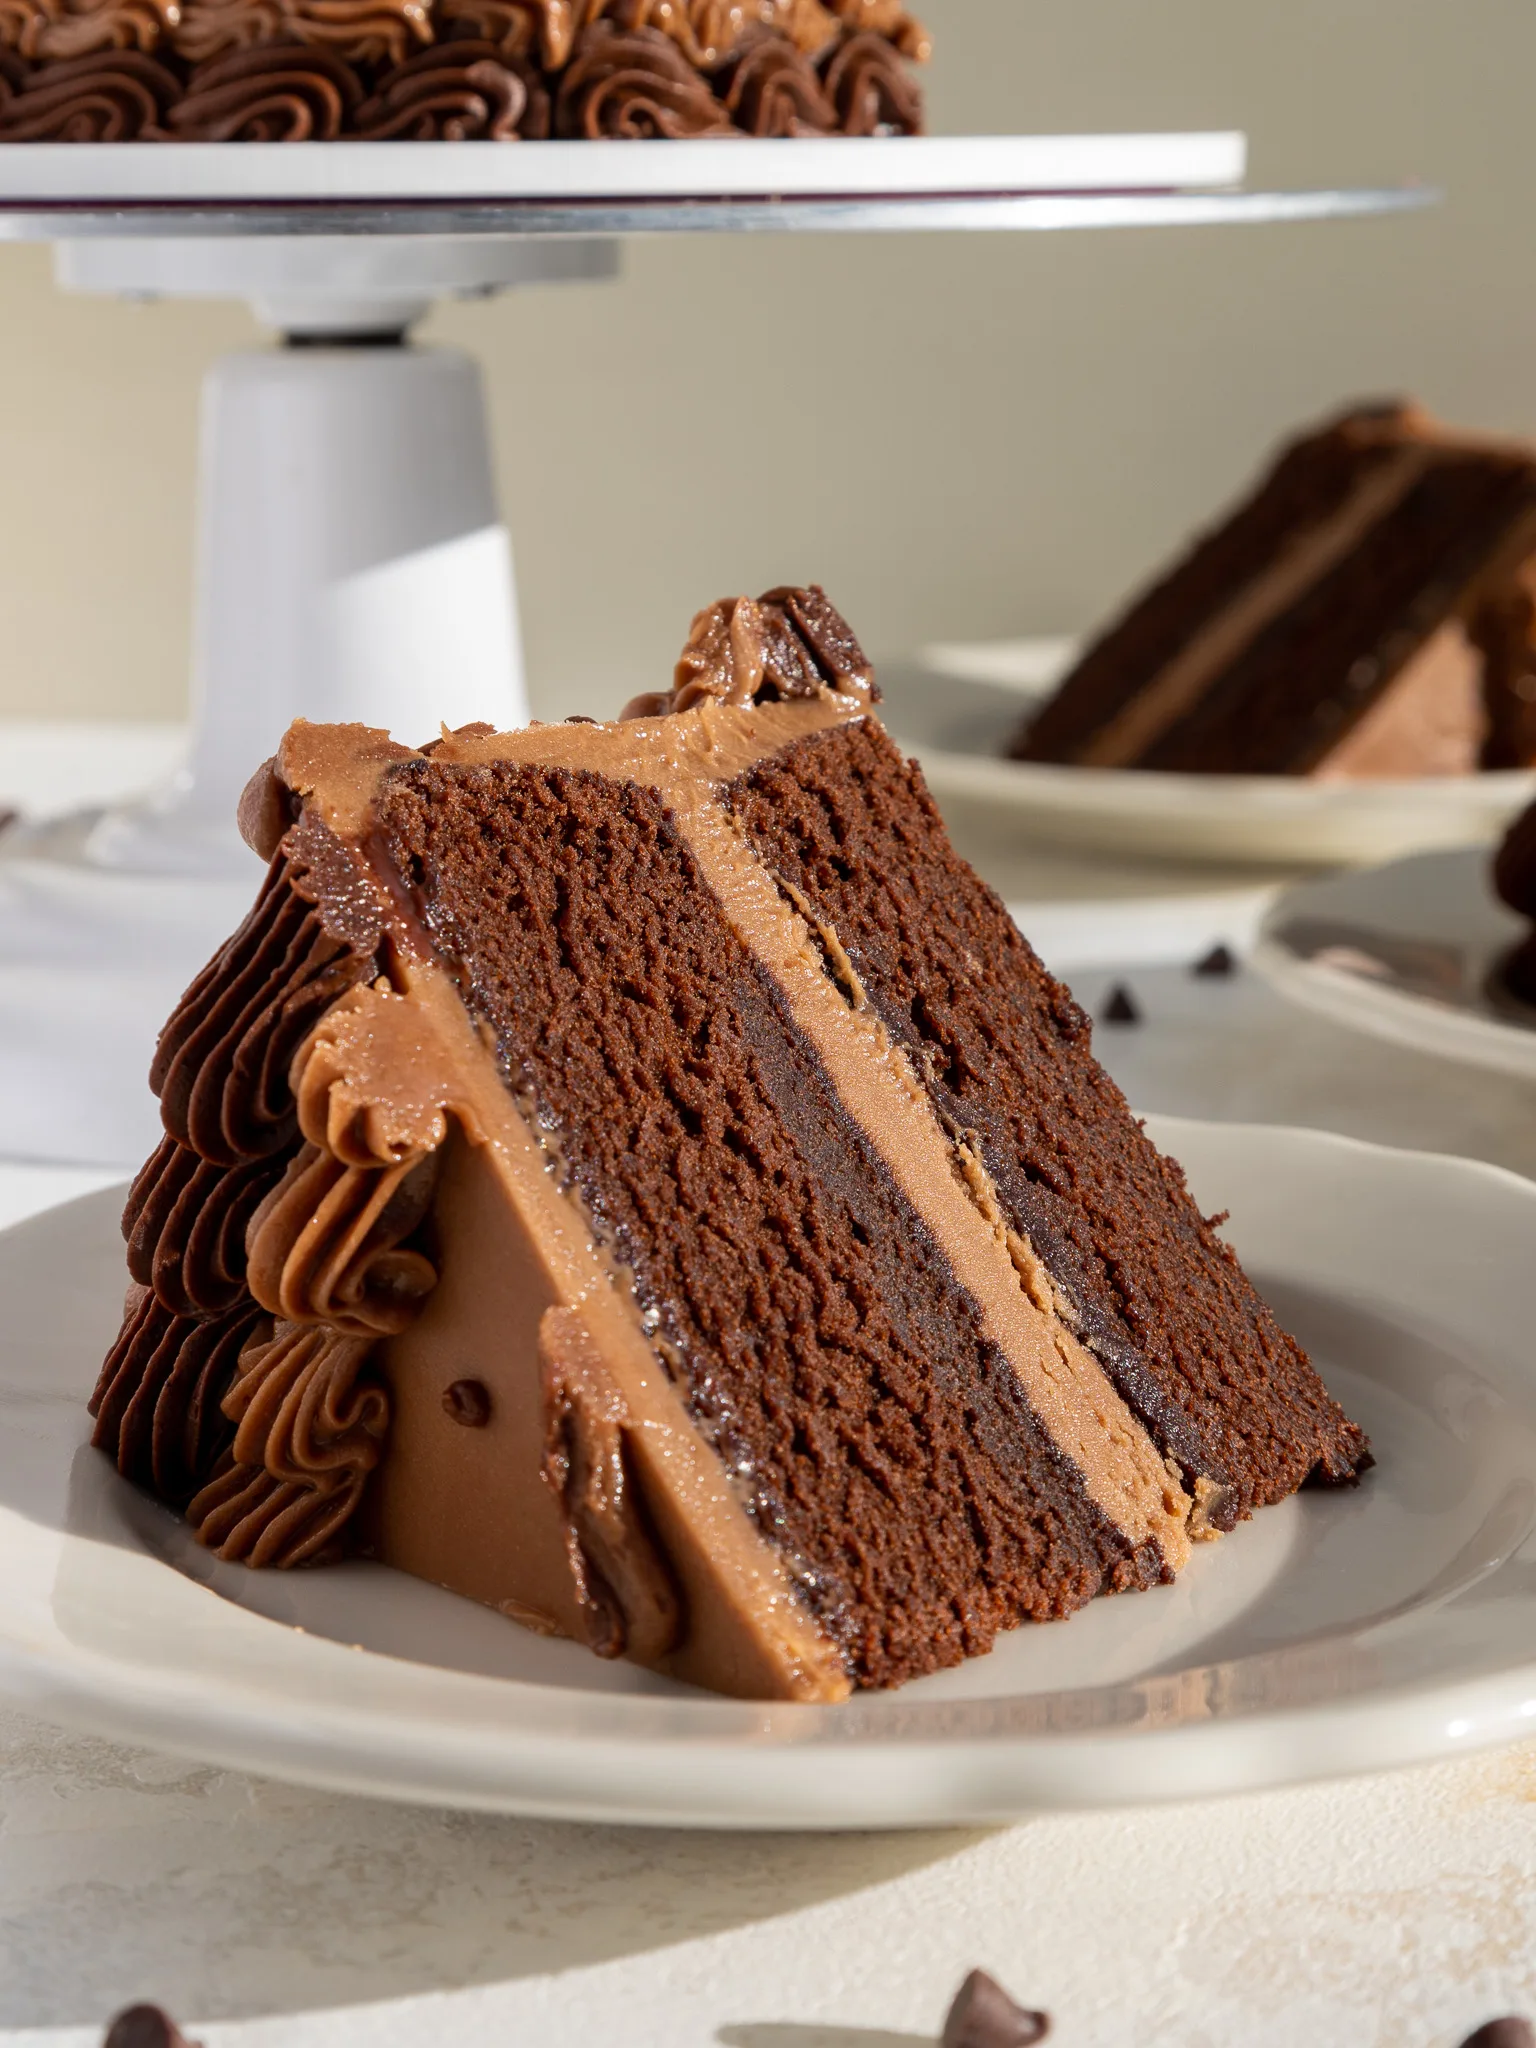 https://chelsweets.com/wp-content/uploads/2023/02/slice-of-heart-shaped-chocolate-cake-better.jpg.webp